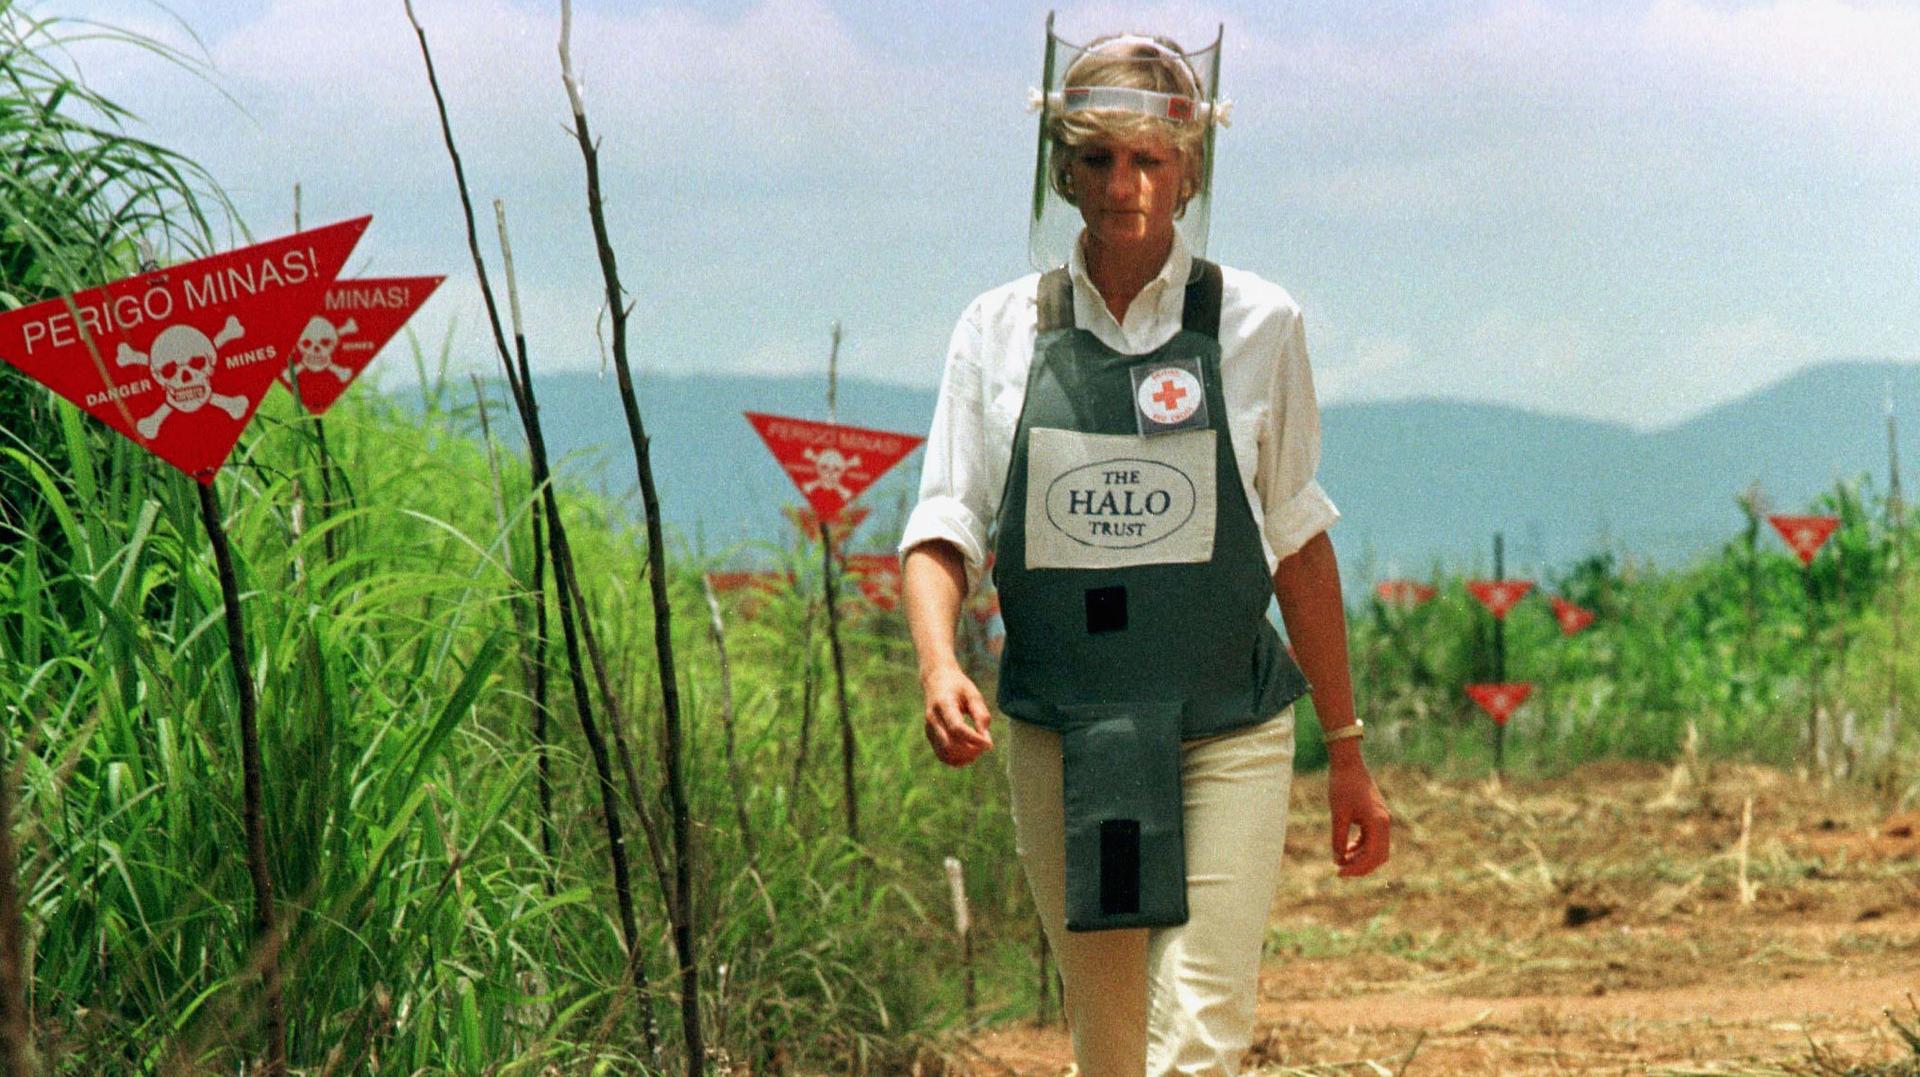 Princess Diana walks through a minefield in Angola, 1997